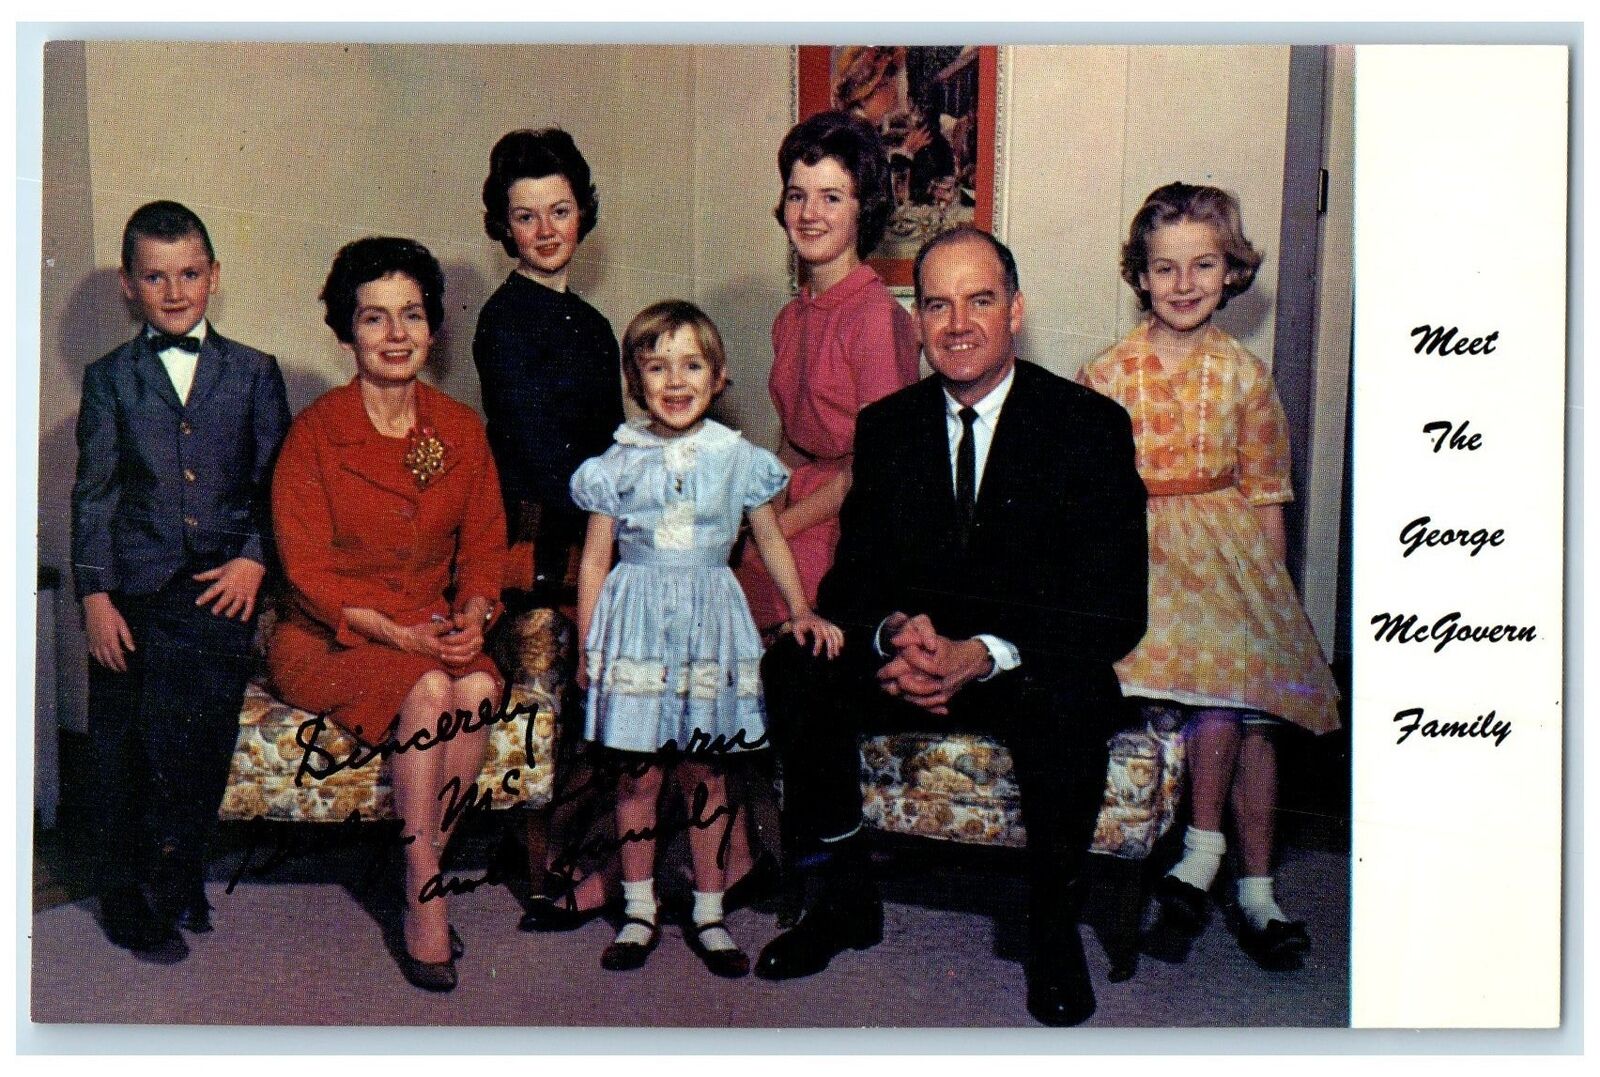 c1960's Meet George McGovern Family Sioux Falls South Dakota Political Postcard